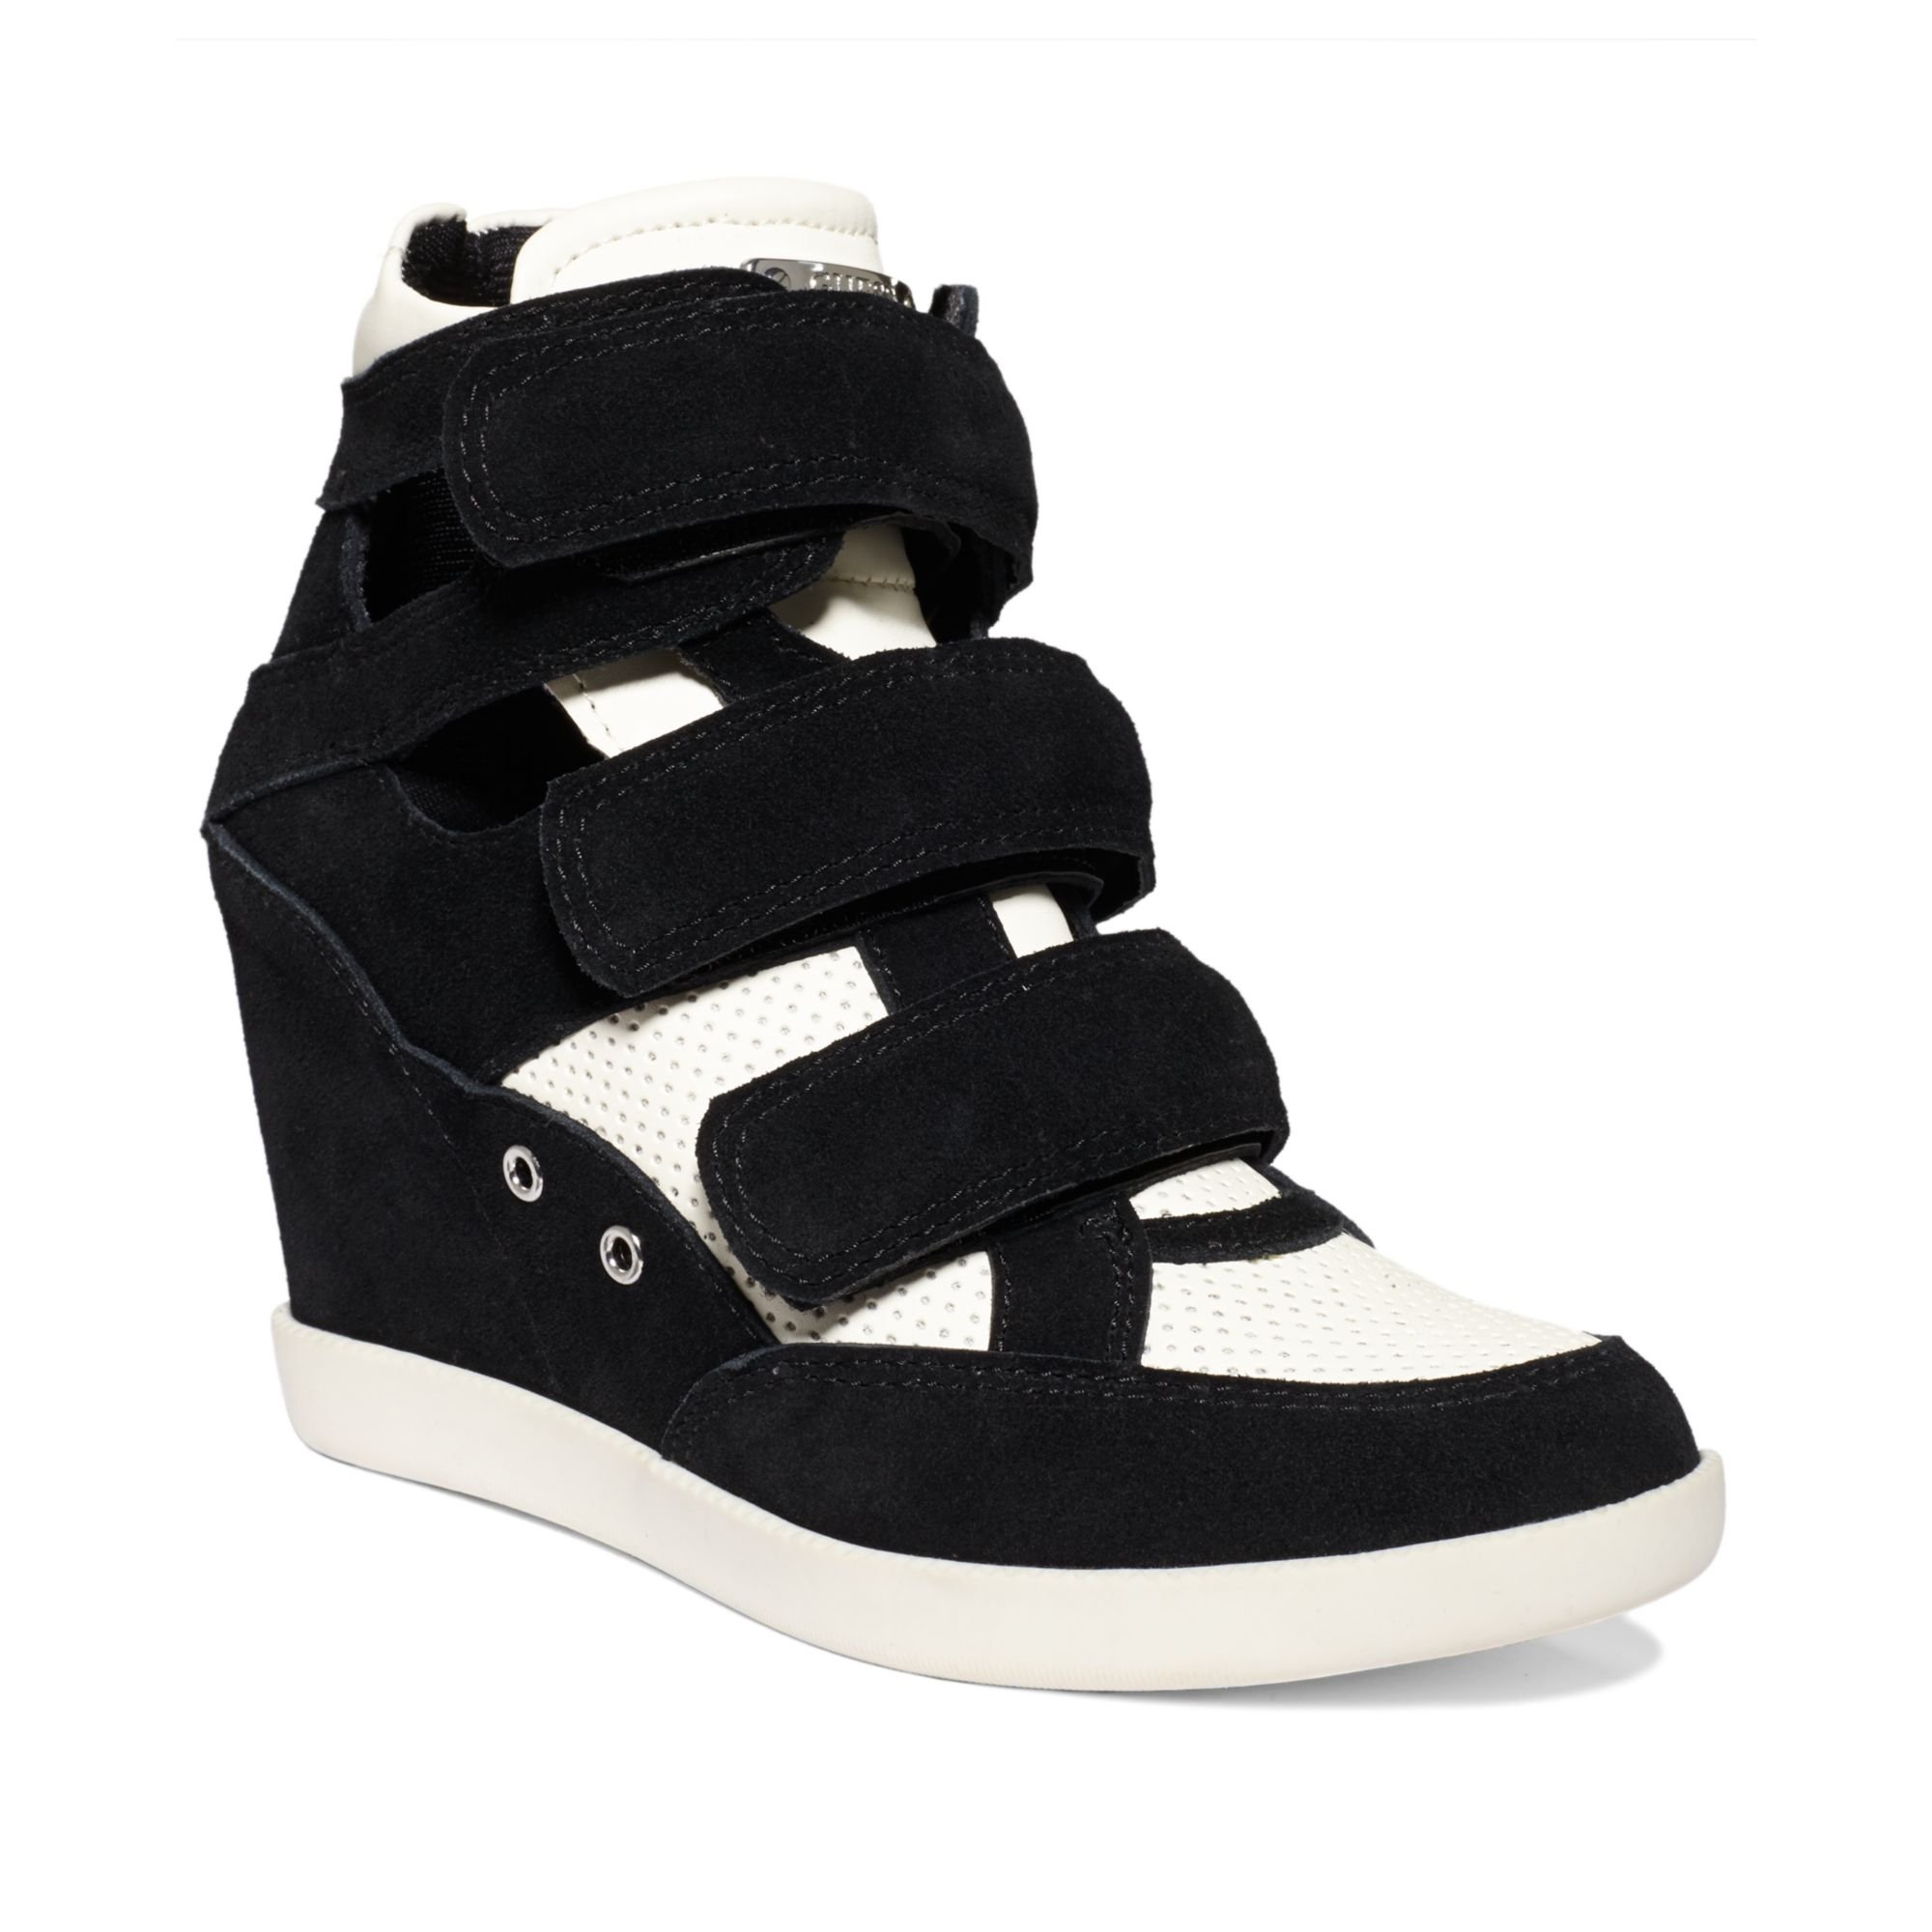 Guess Herra Platform Wedge Sneakers in White (Black/White) | Lyst